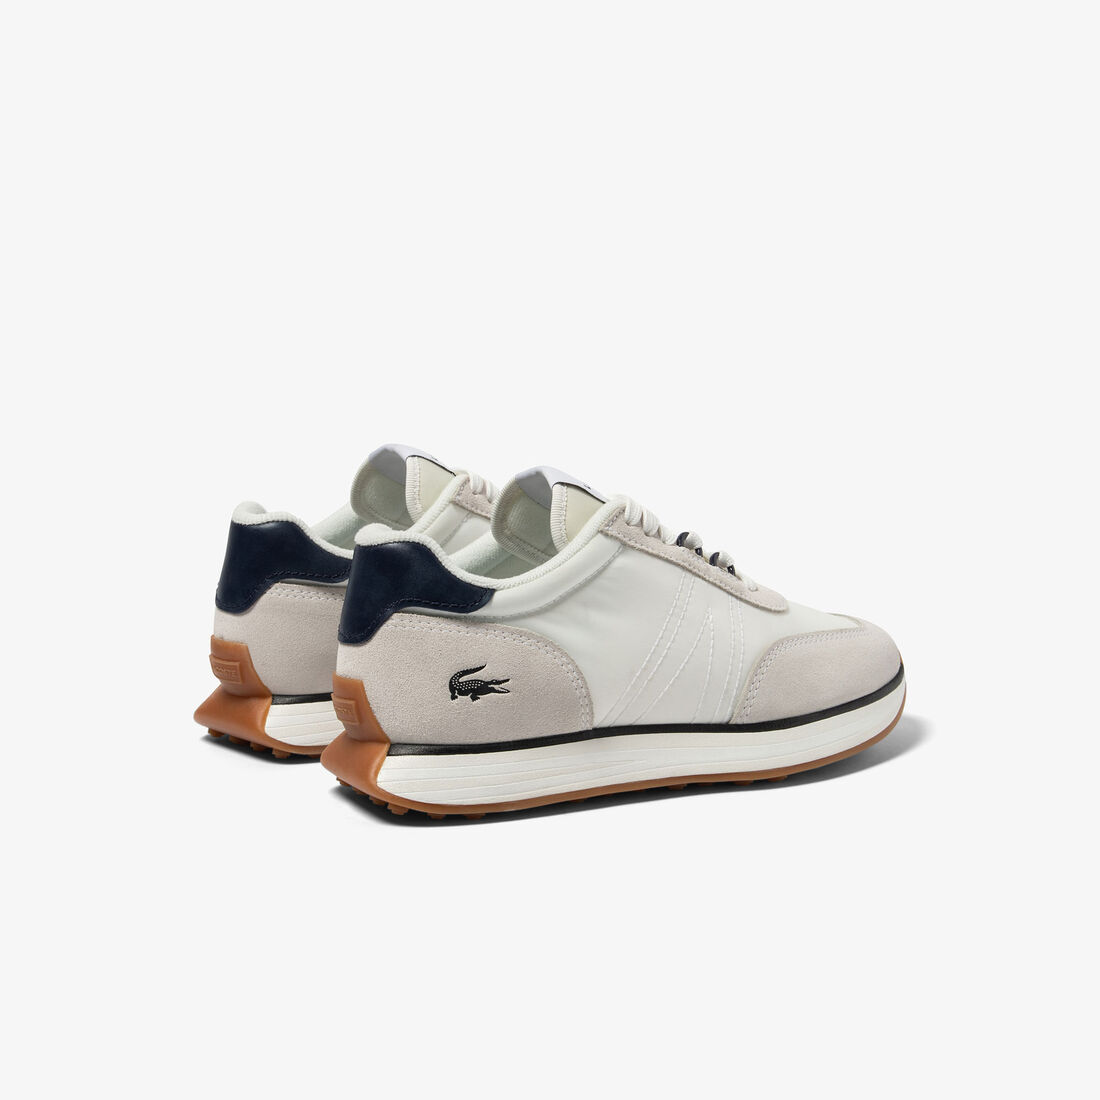 Lacoste L-spin Textil Sneakers Herren Weiß Navy | QNOR-76981